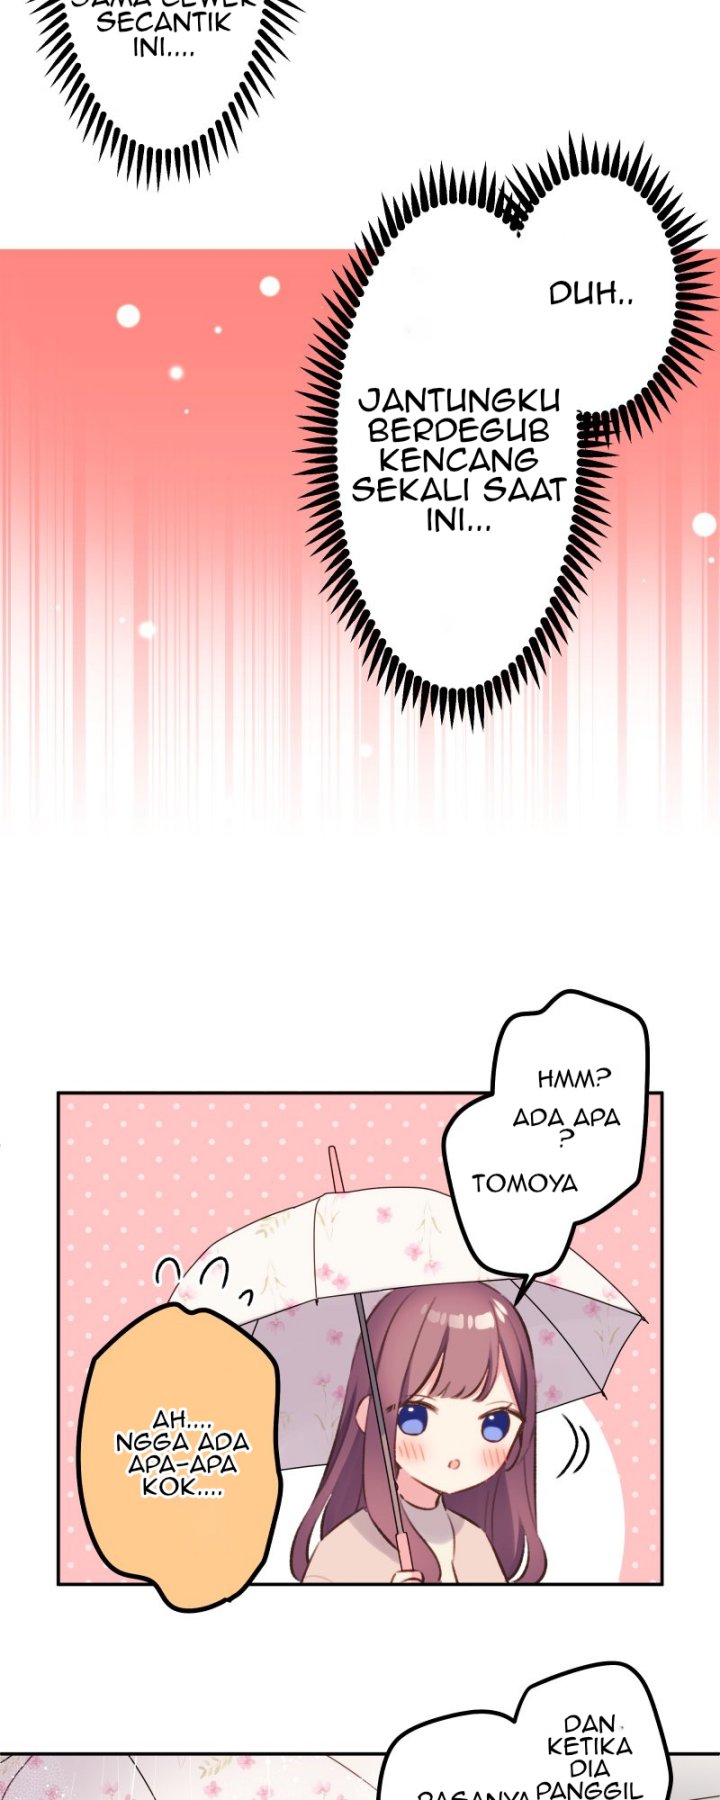 Waka-chan Is Flirty Again Chapter 104